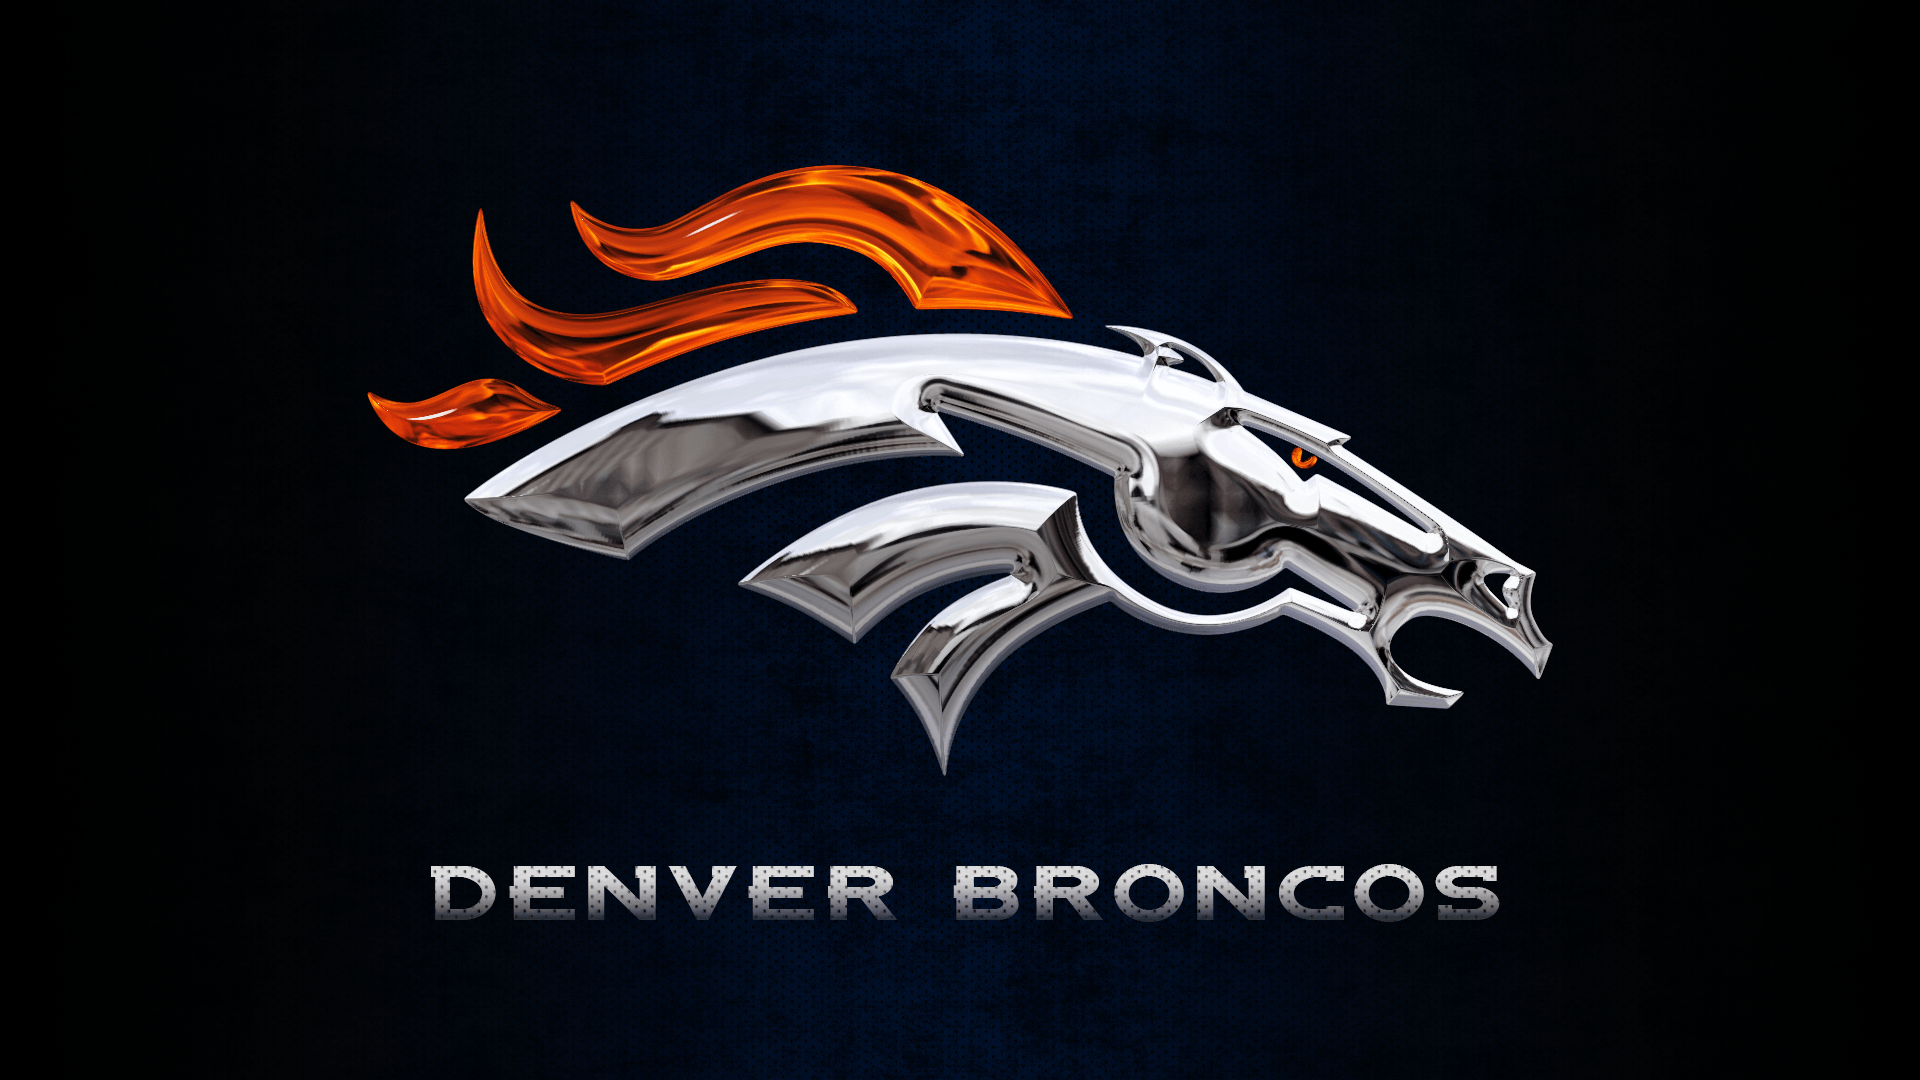 NFL Broncos Logo - Denver Broncos Logo Wallpaper | PixelsTalk.Net